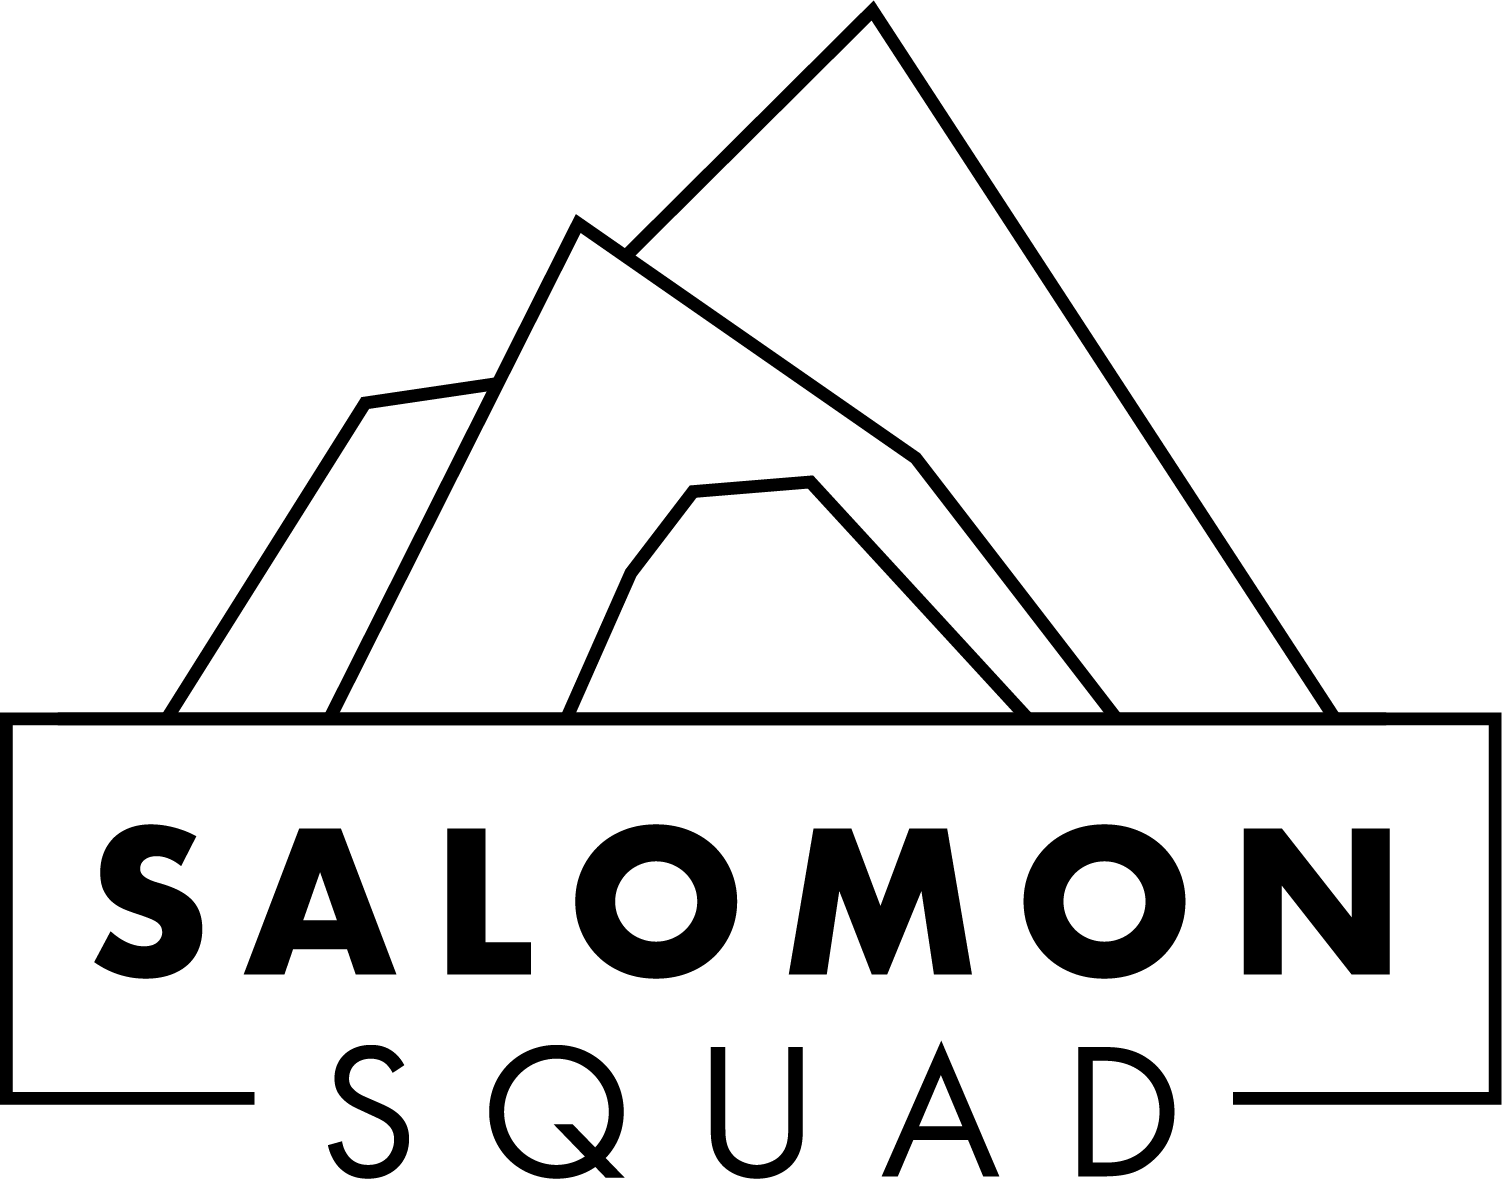 Member of the Salomon Squad